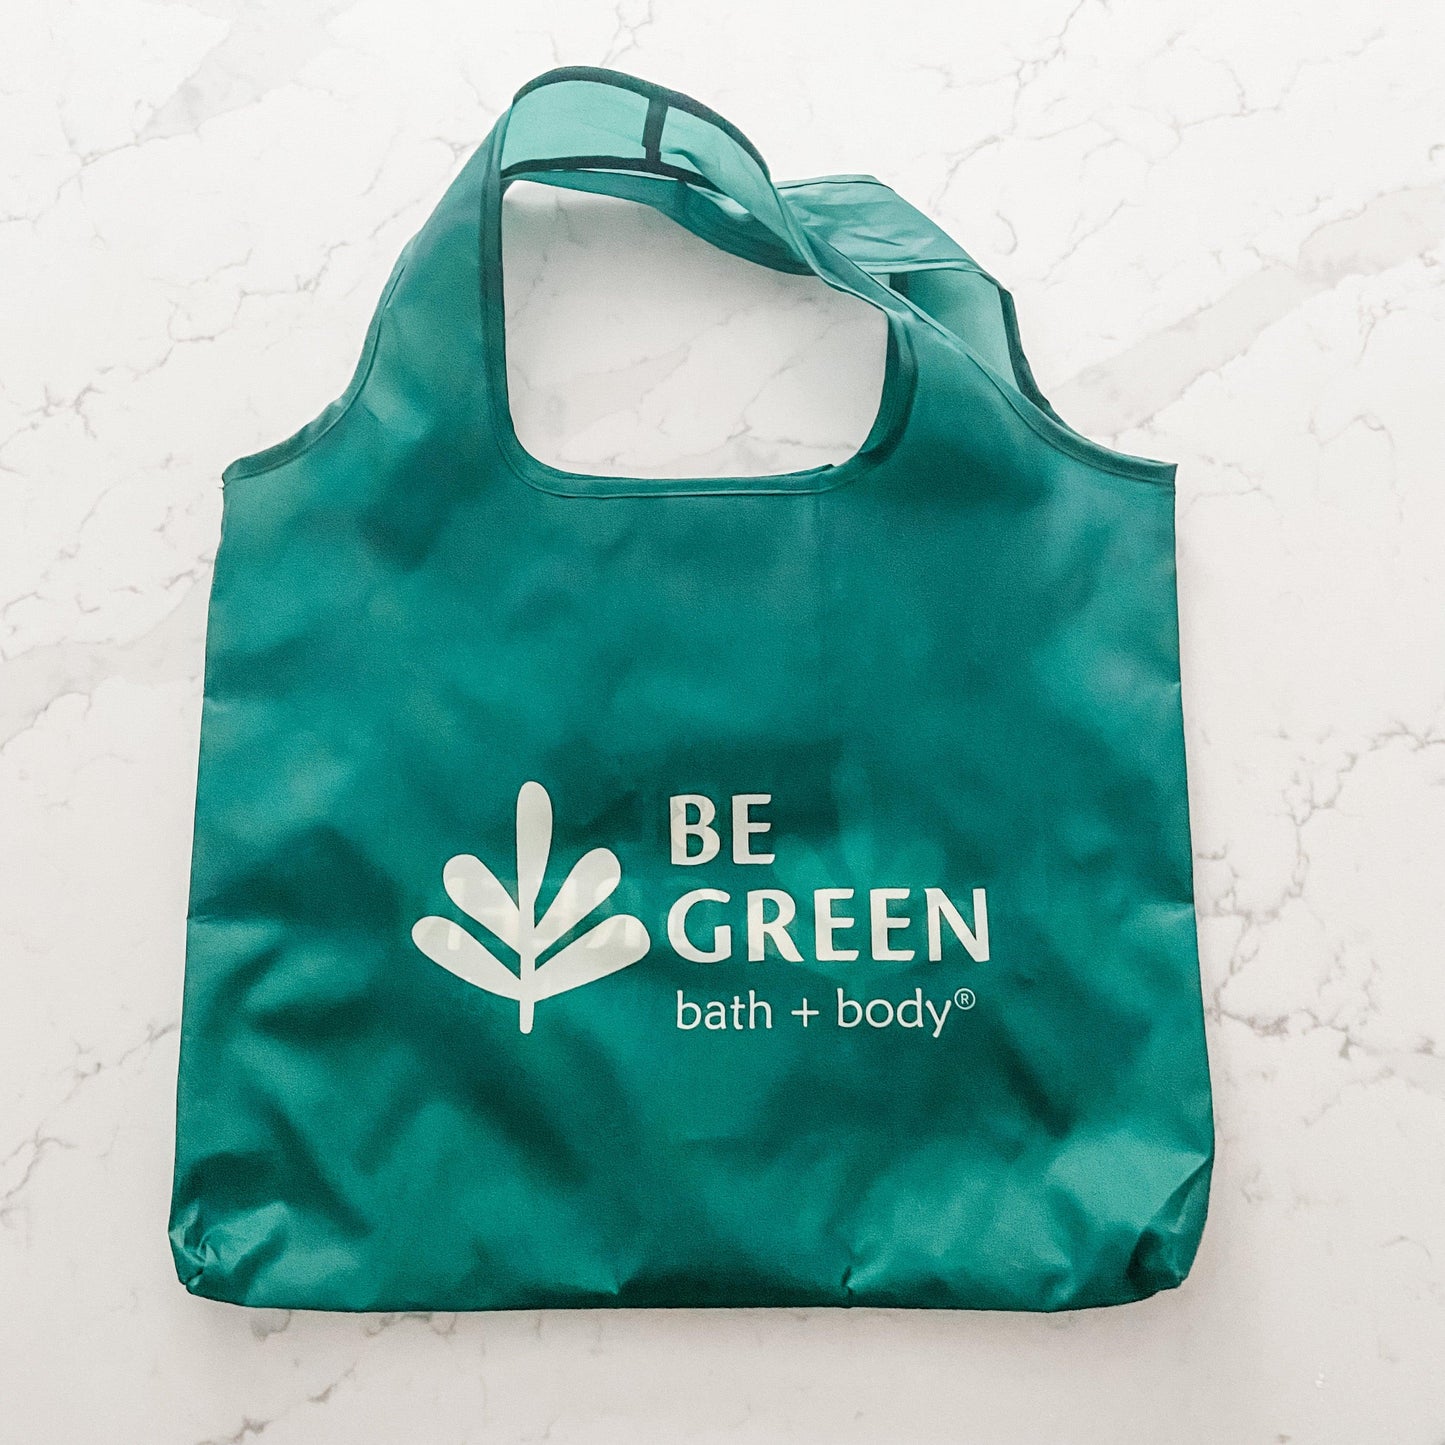 Be Green Bath + Body Reusable Green Tote bag with logo